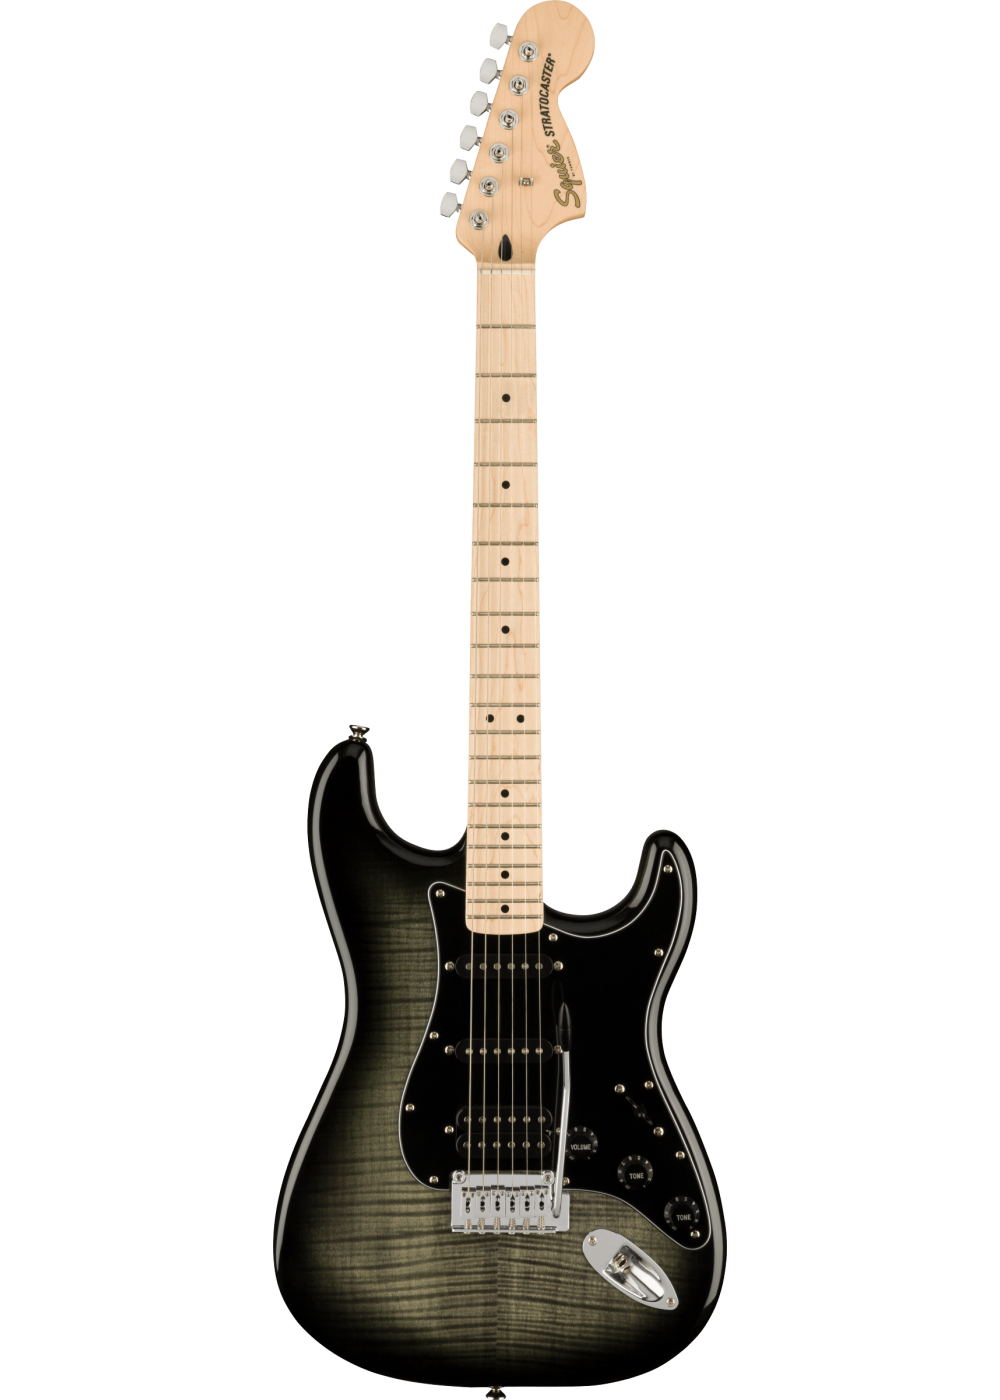 Fender squier Affinity stratocaster hss